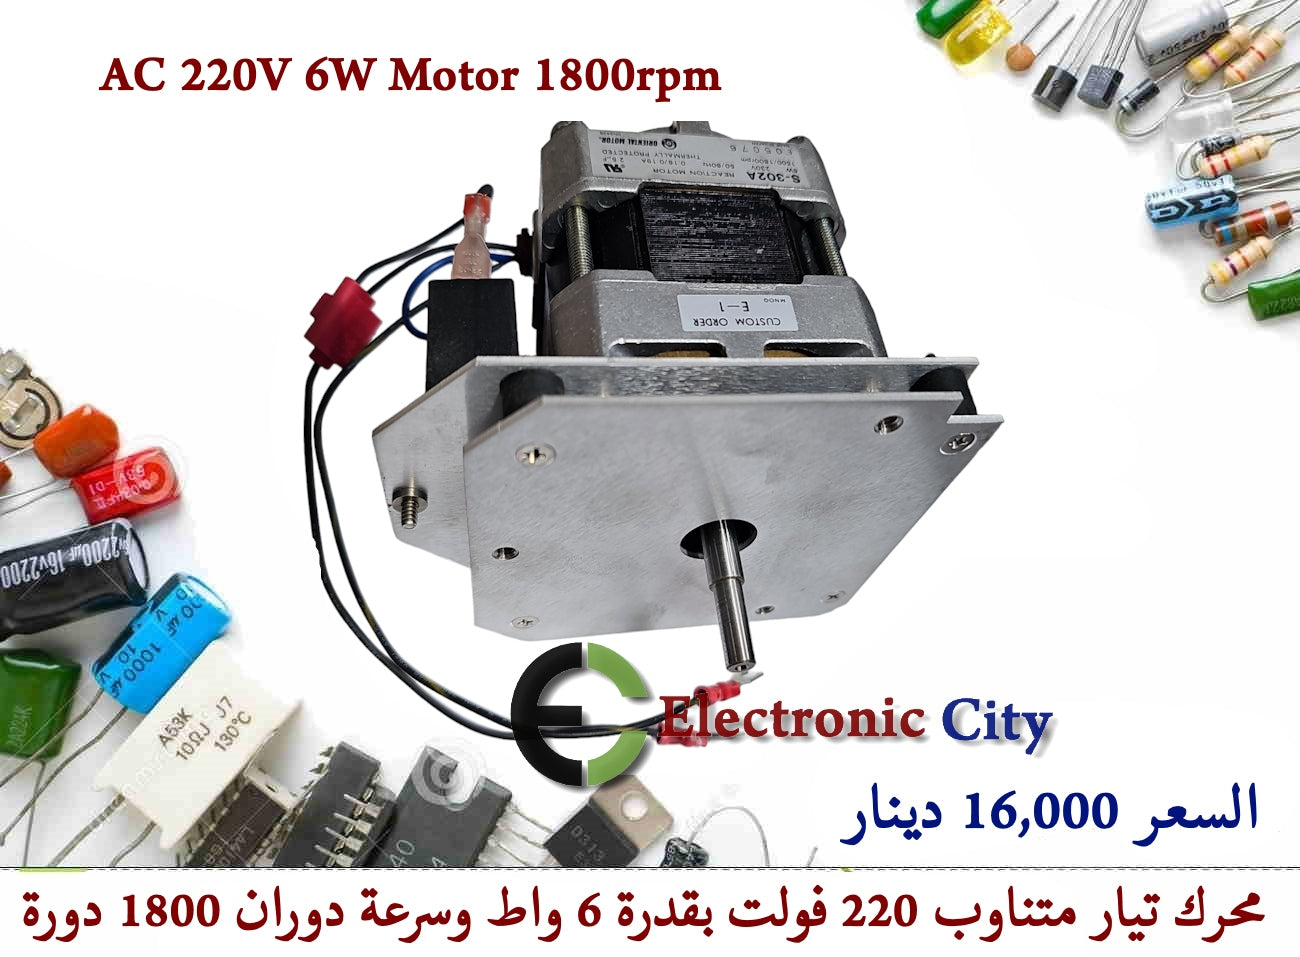 AC 220V 6W Motor 1800rpm